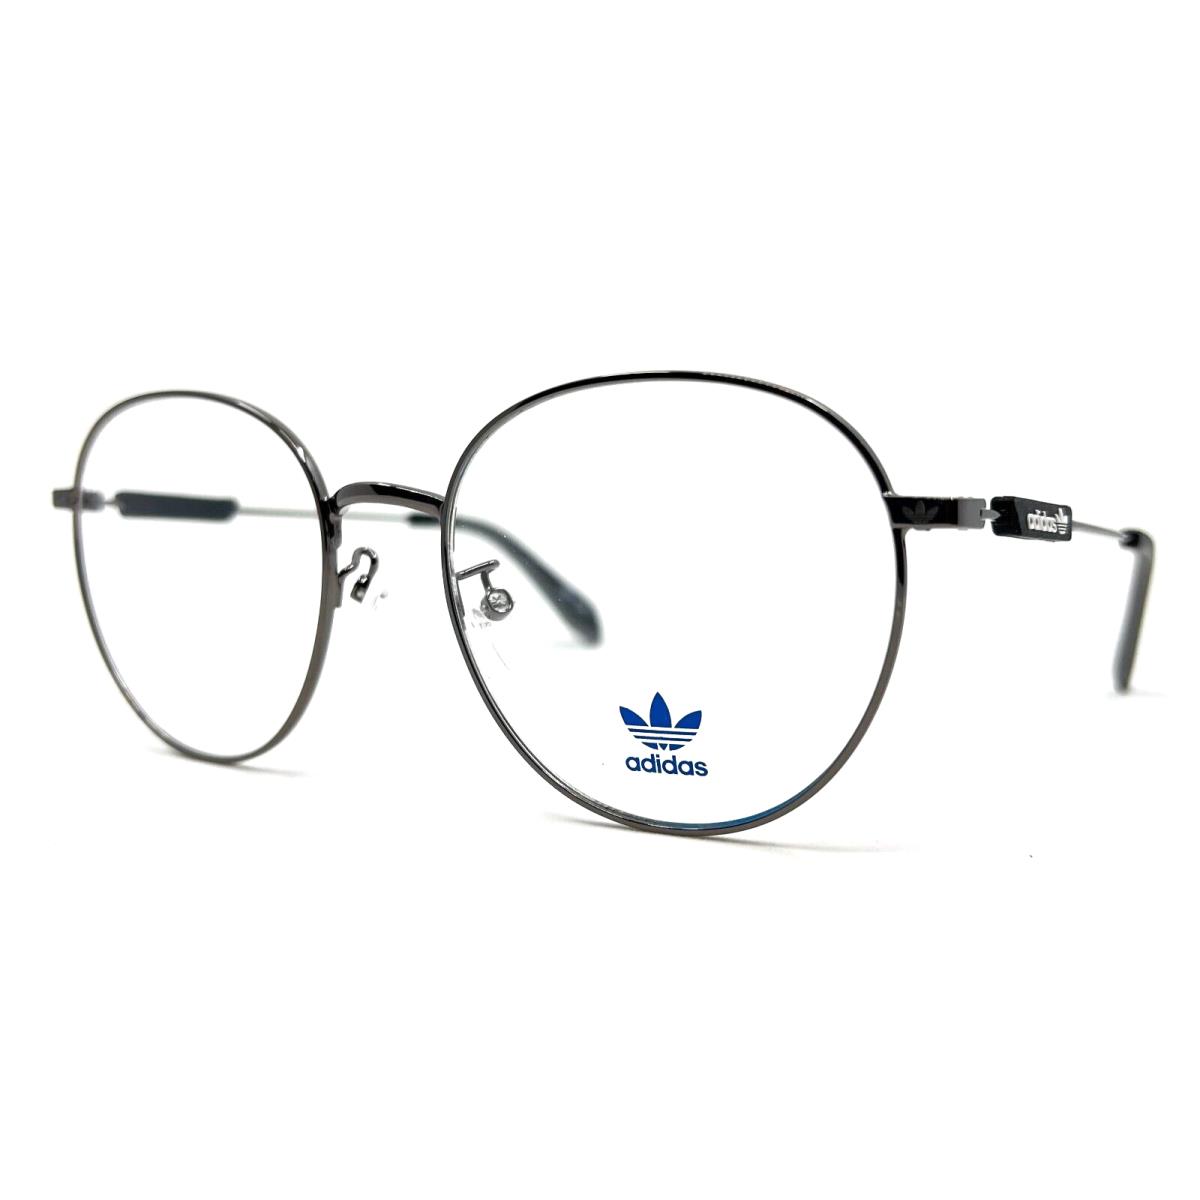 Adidas Originals - OR5033 012 54/19/145 - Gun - Eyeglasses Case - Frame: Gray